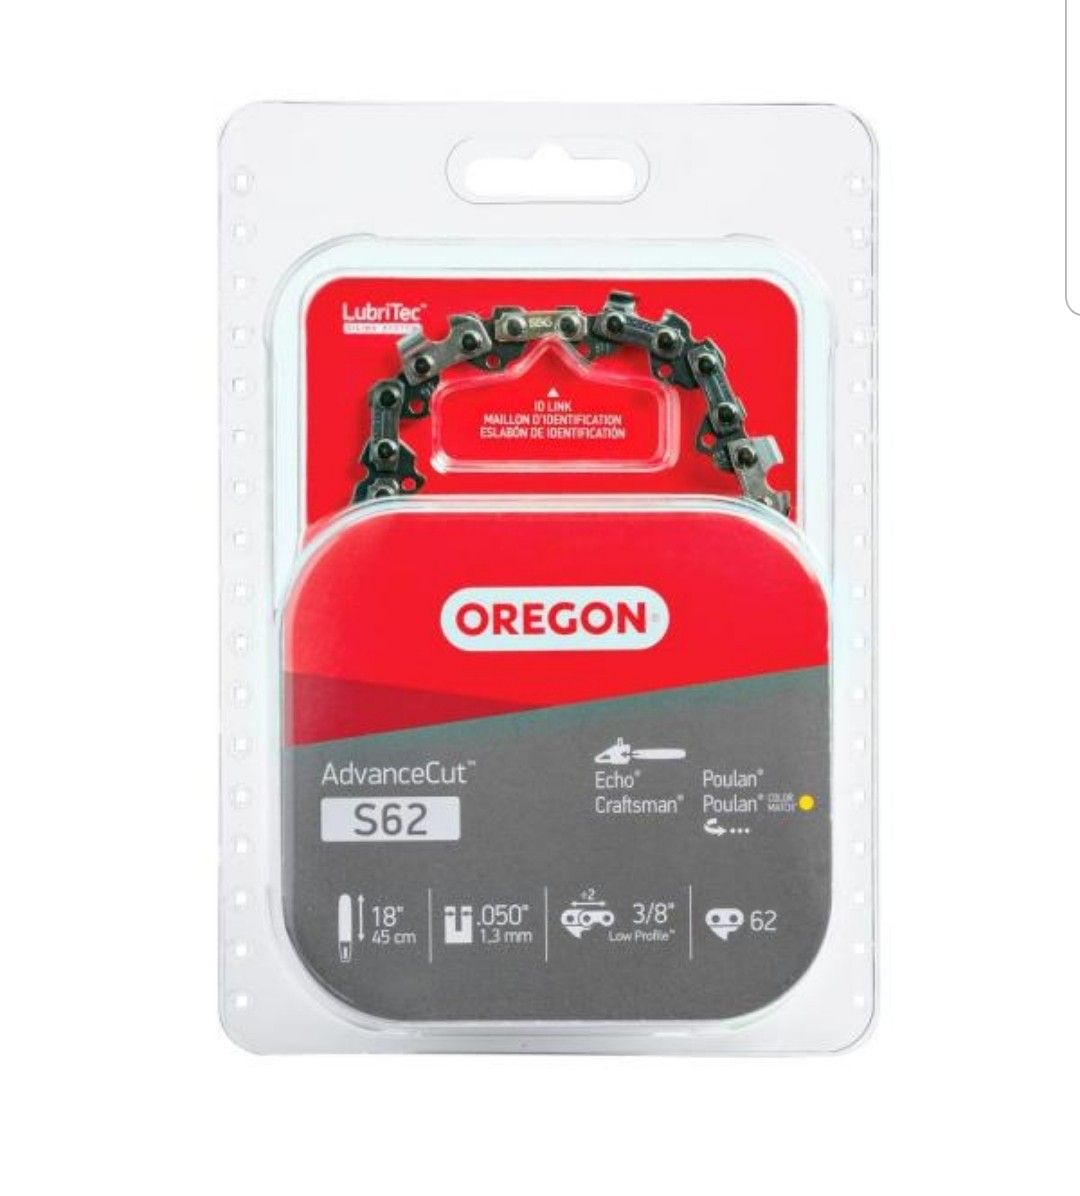 Oregon 18 in. Chainsaw Chain